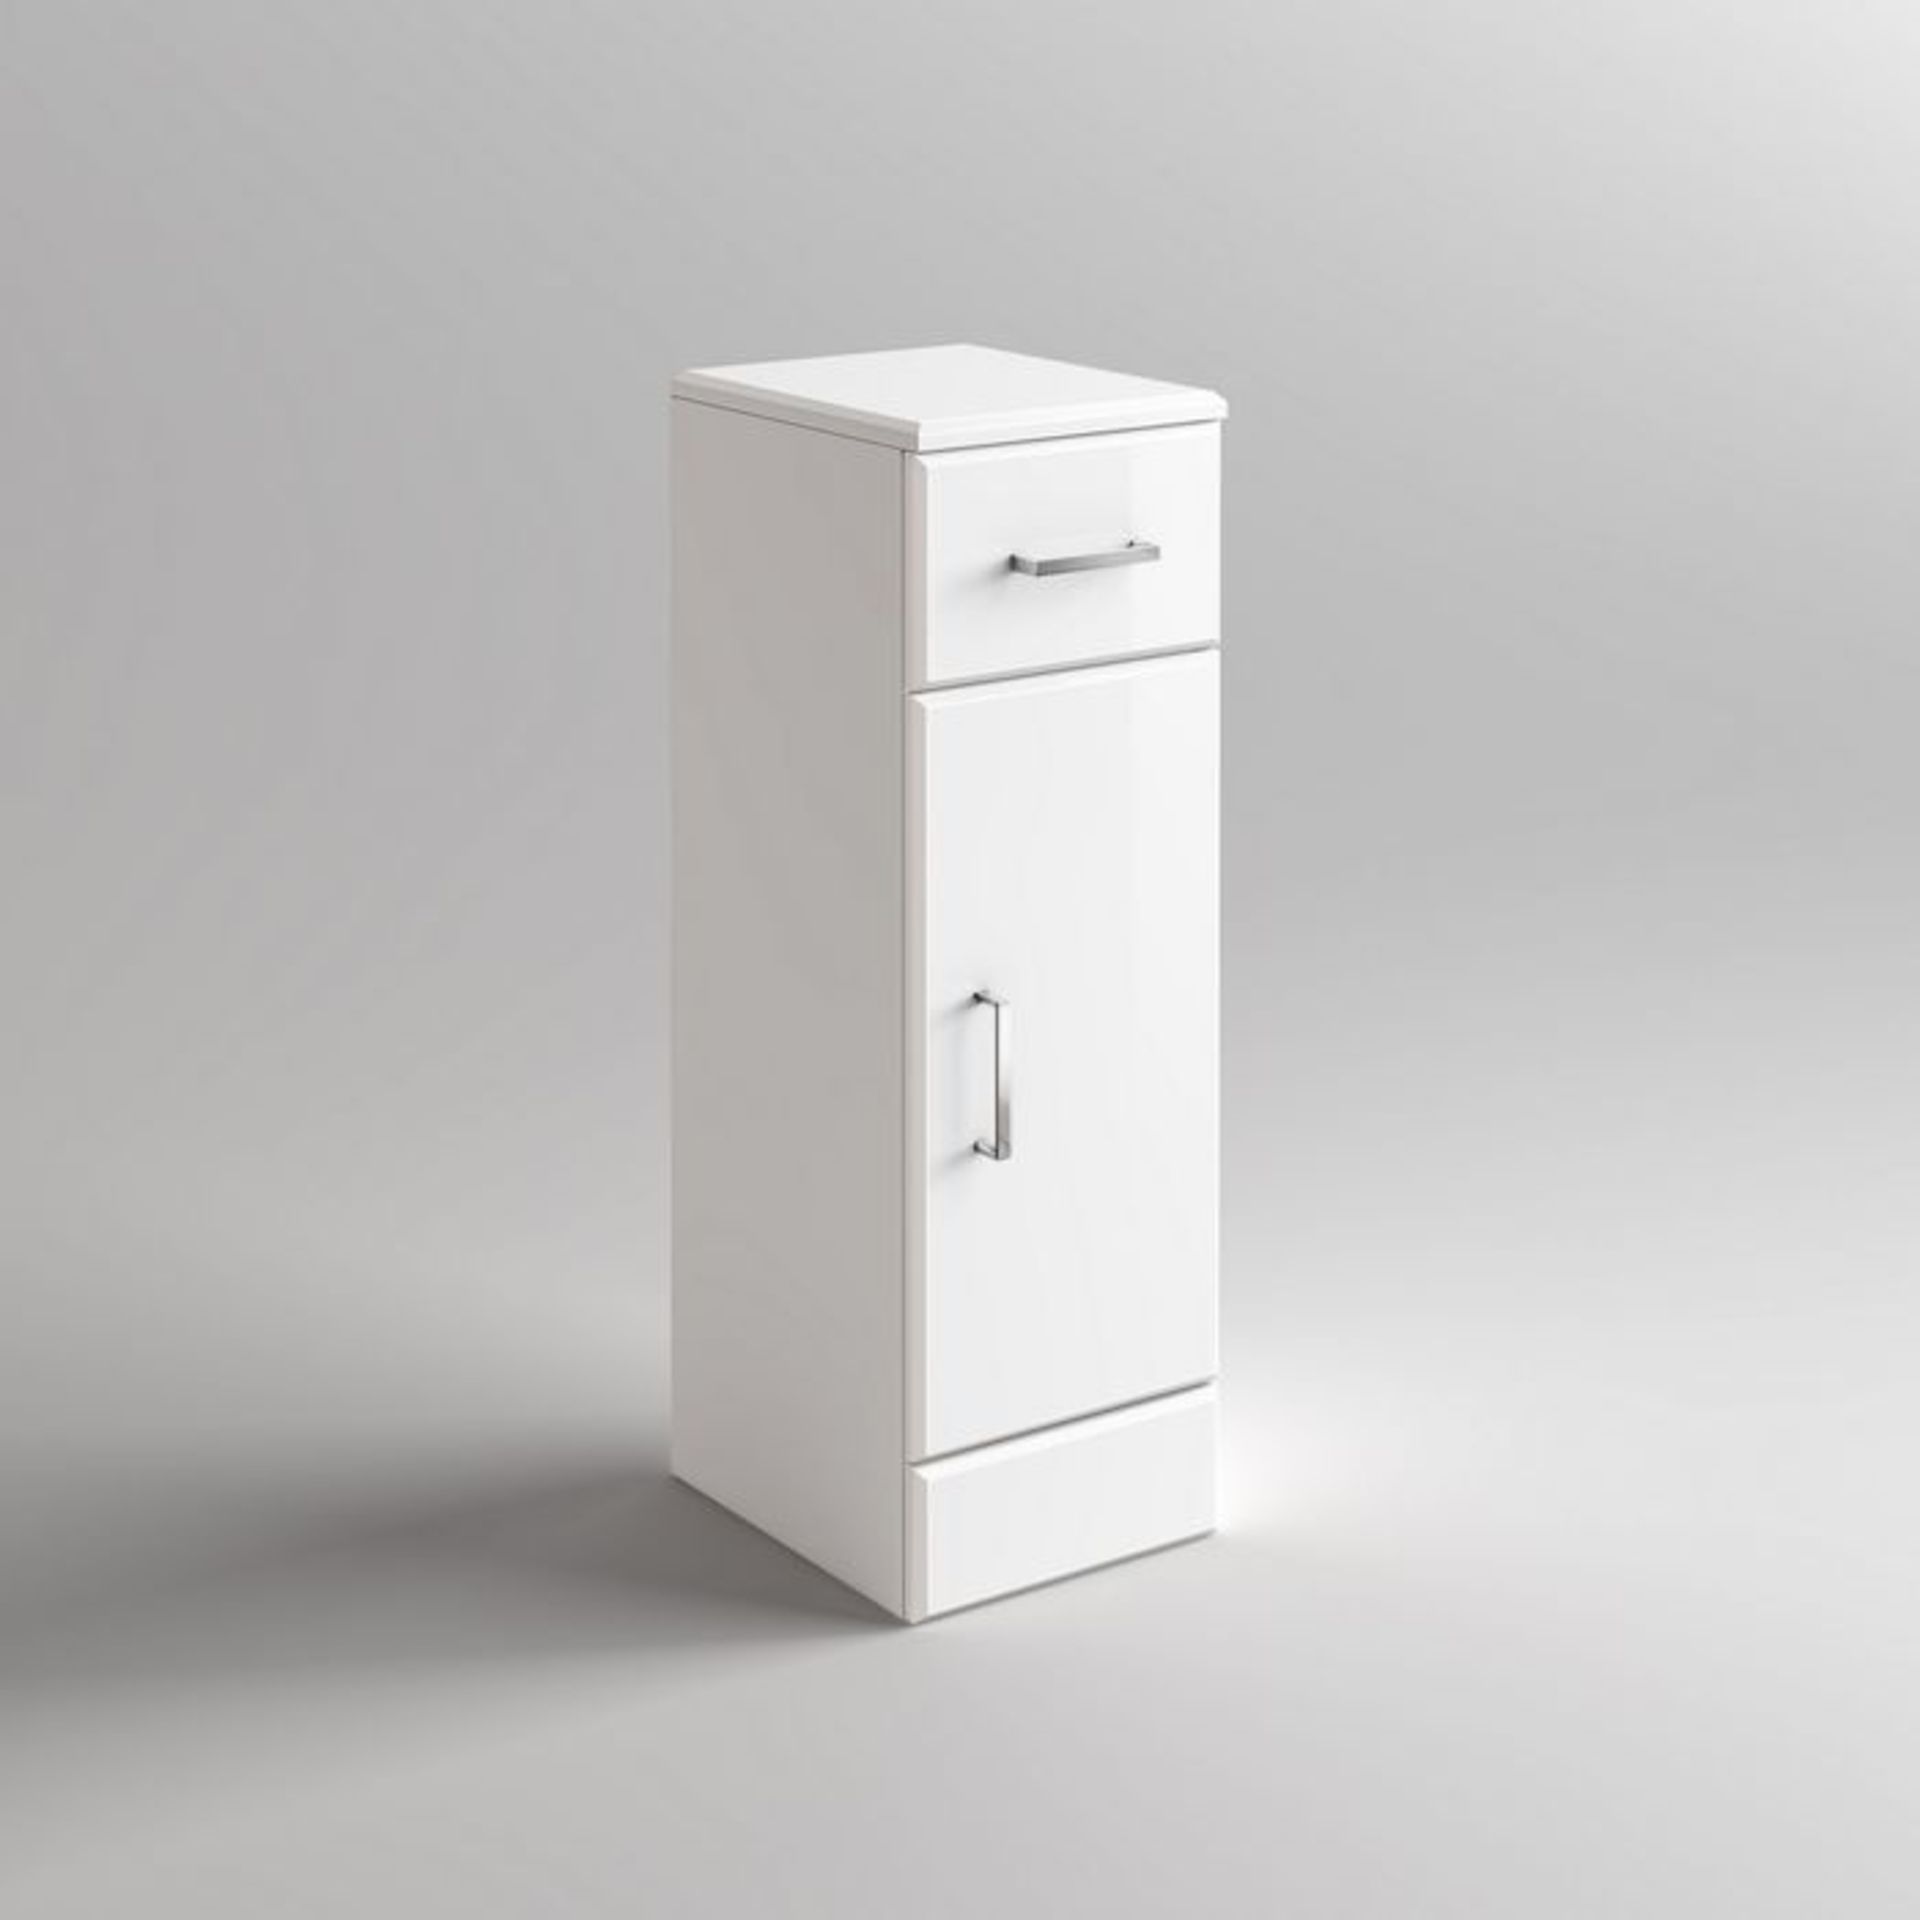 (H173) 250x300mm Quartz Gloss White Small Side Cabinet Unit. RRP £143.99. Pristine gloss white - Image 5 of 8